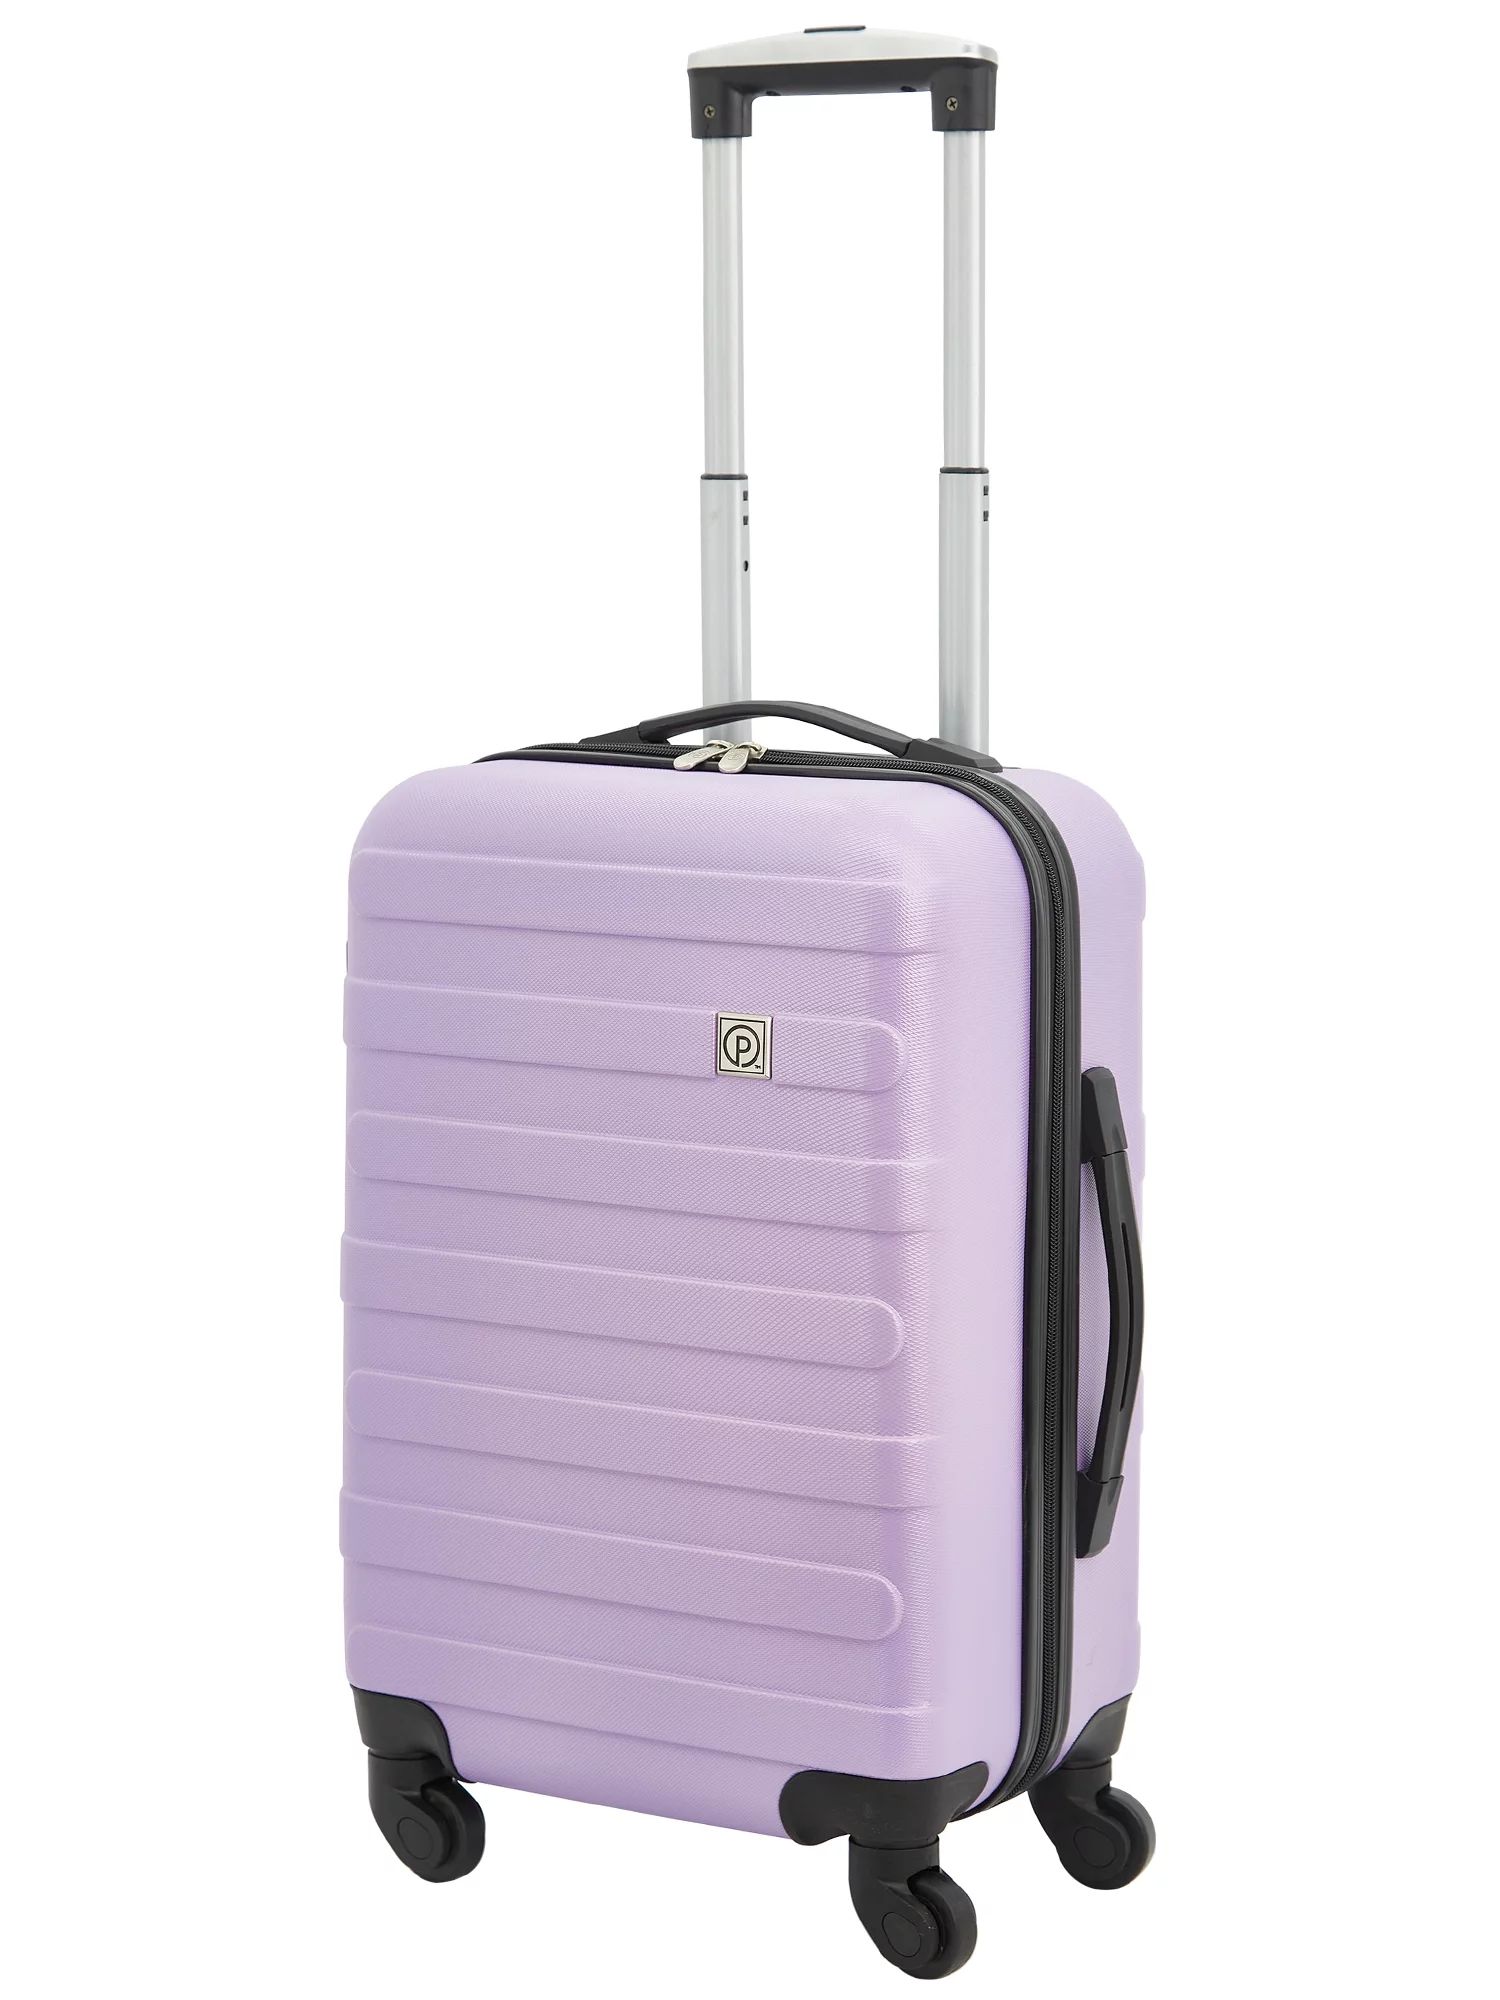 Protege 20" Hardside Luggage, Lavender - Walmart.com | Walmart (US)